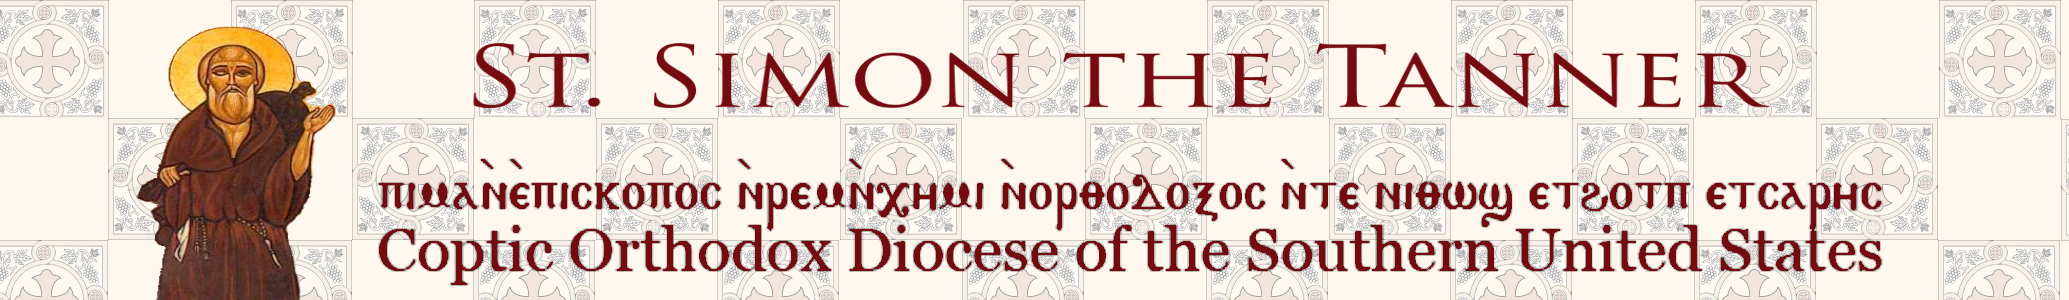 St. Simon the Tanner | Coptic Orthodox Church